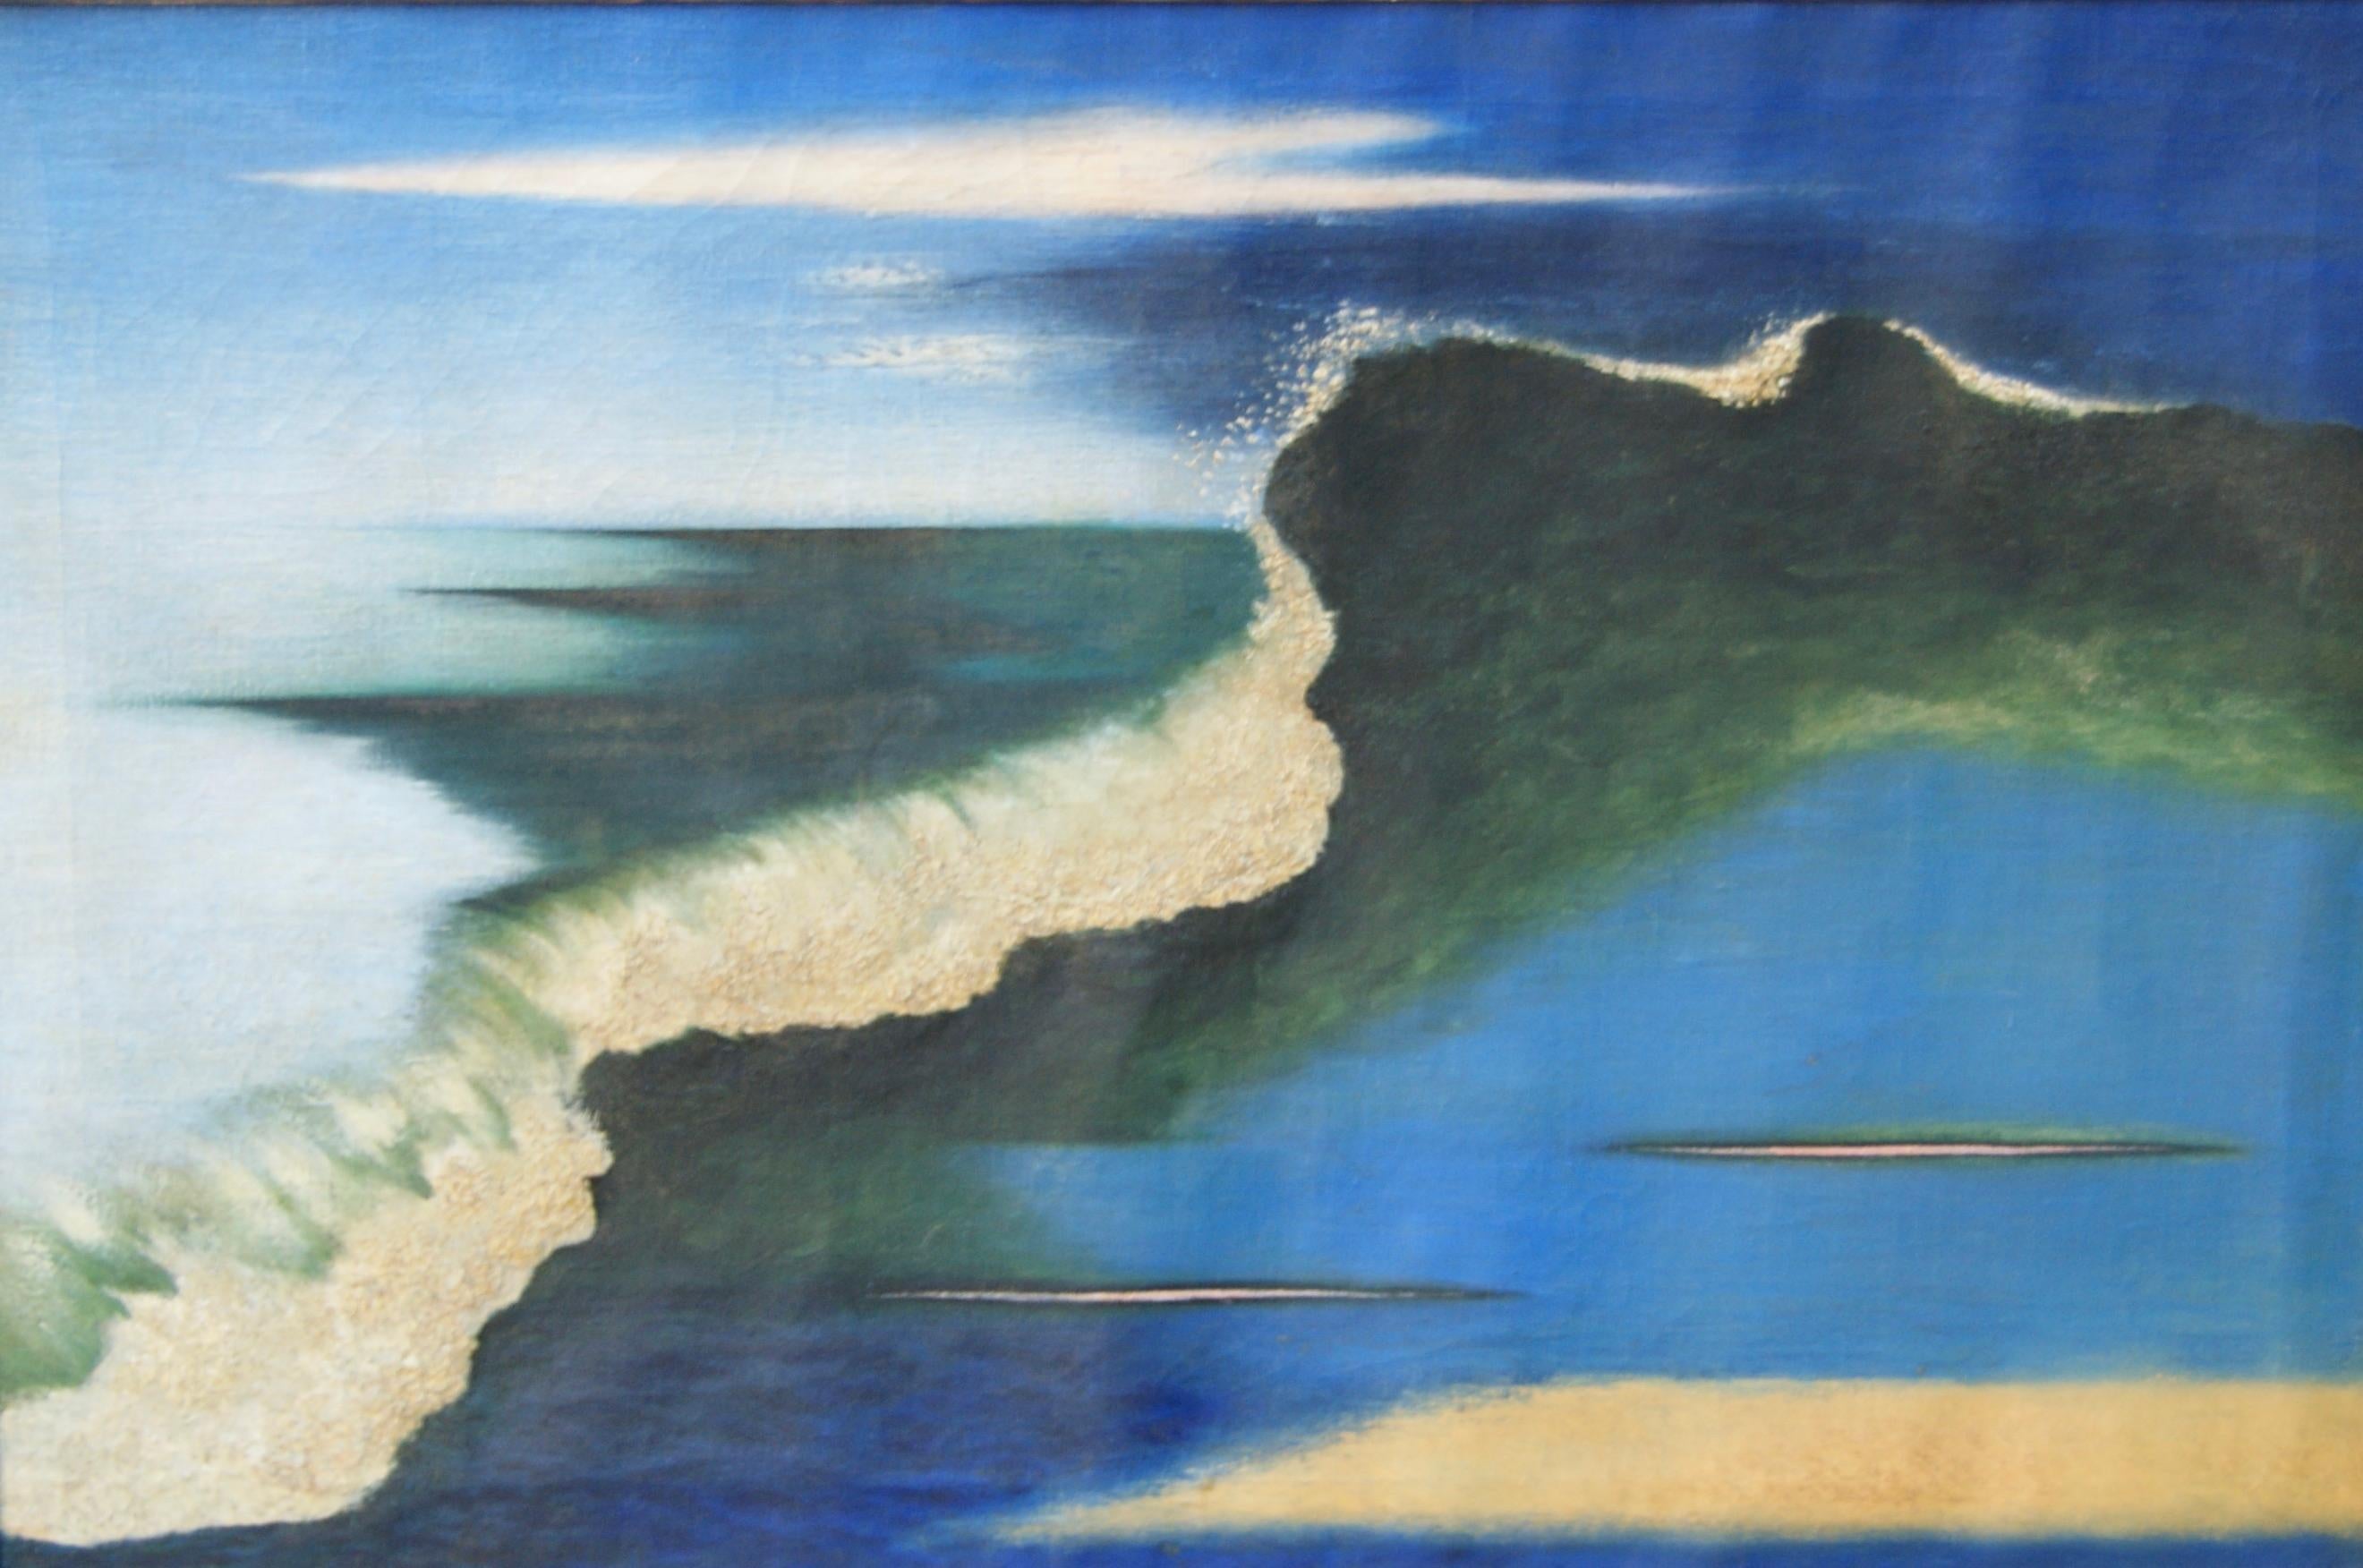 Edward Biberman Landscape Painting - "Wave" Abstract Seascape American Modern Modernism 20th Century Social Realism 